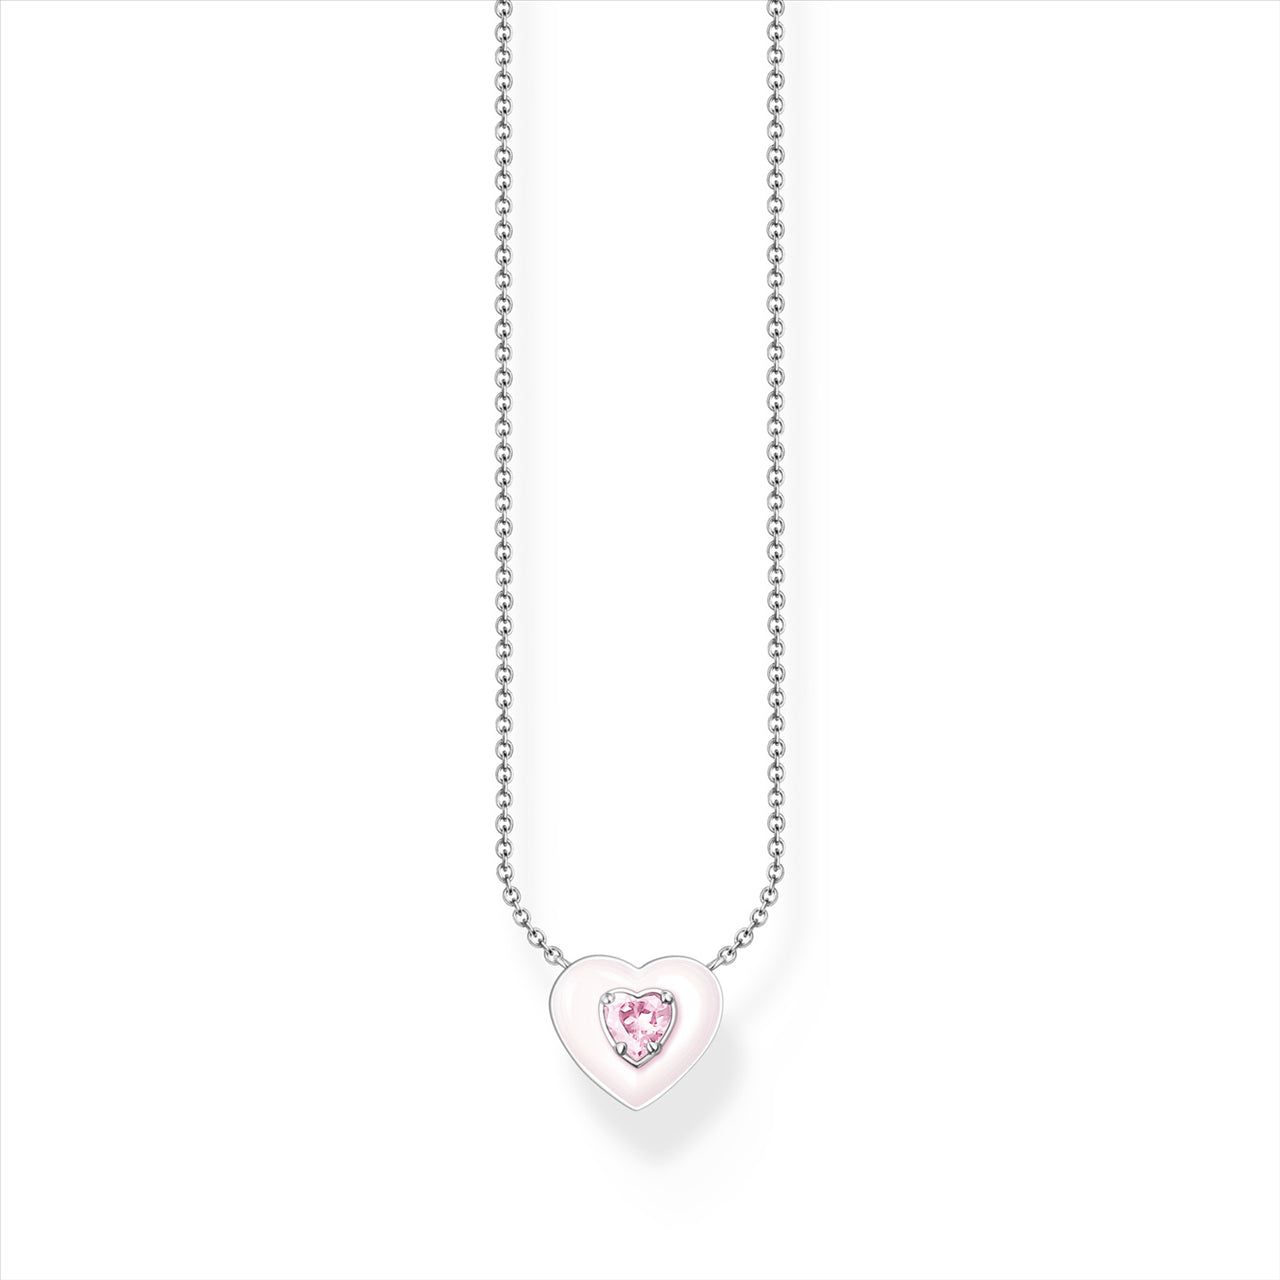 Thomas Sabo Pink Heart Necklace.